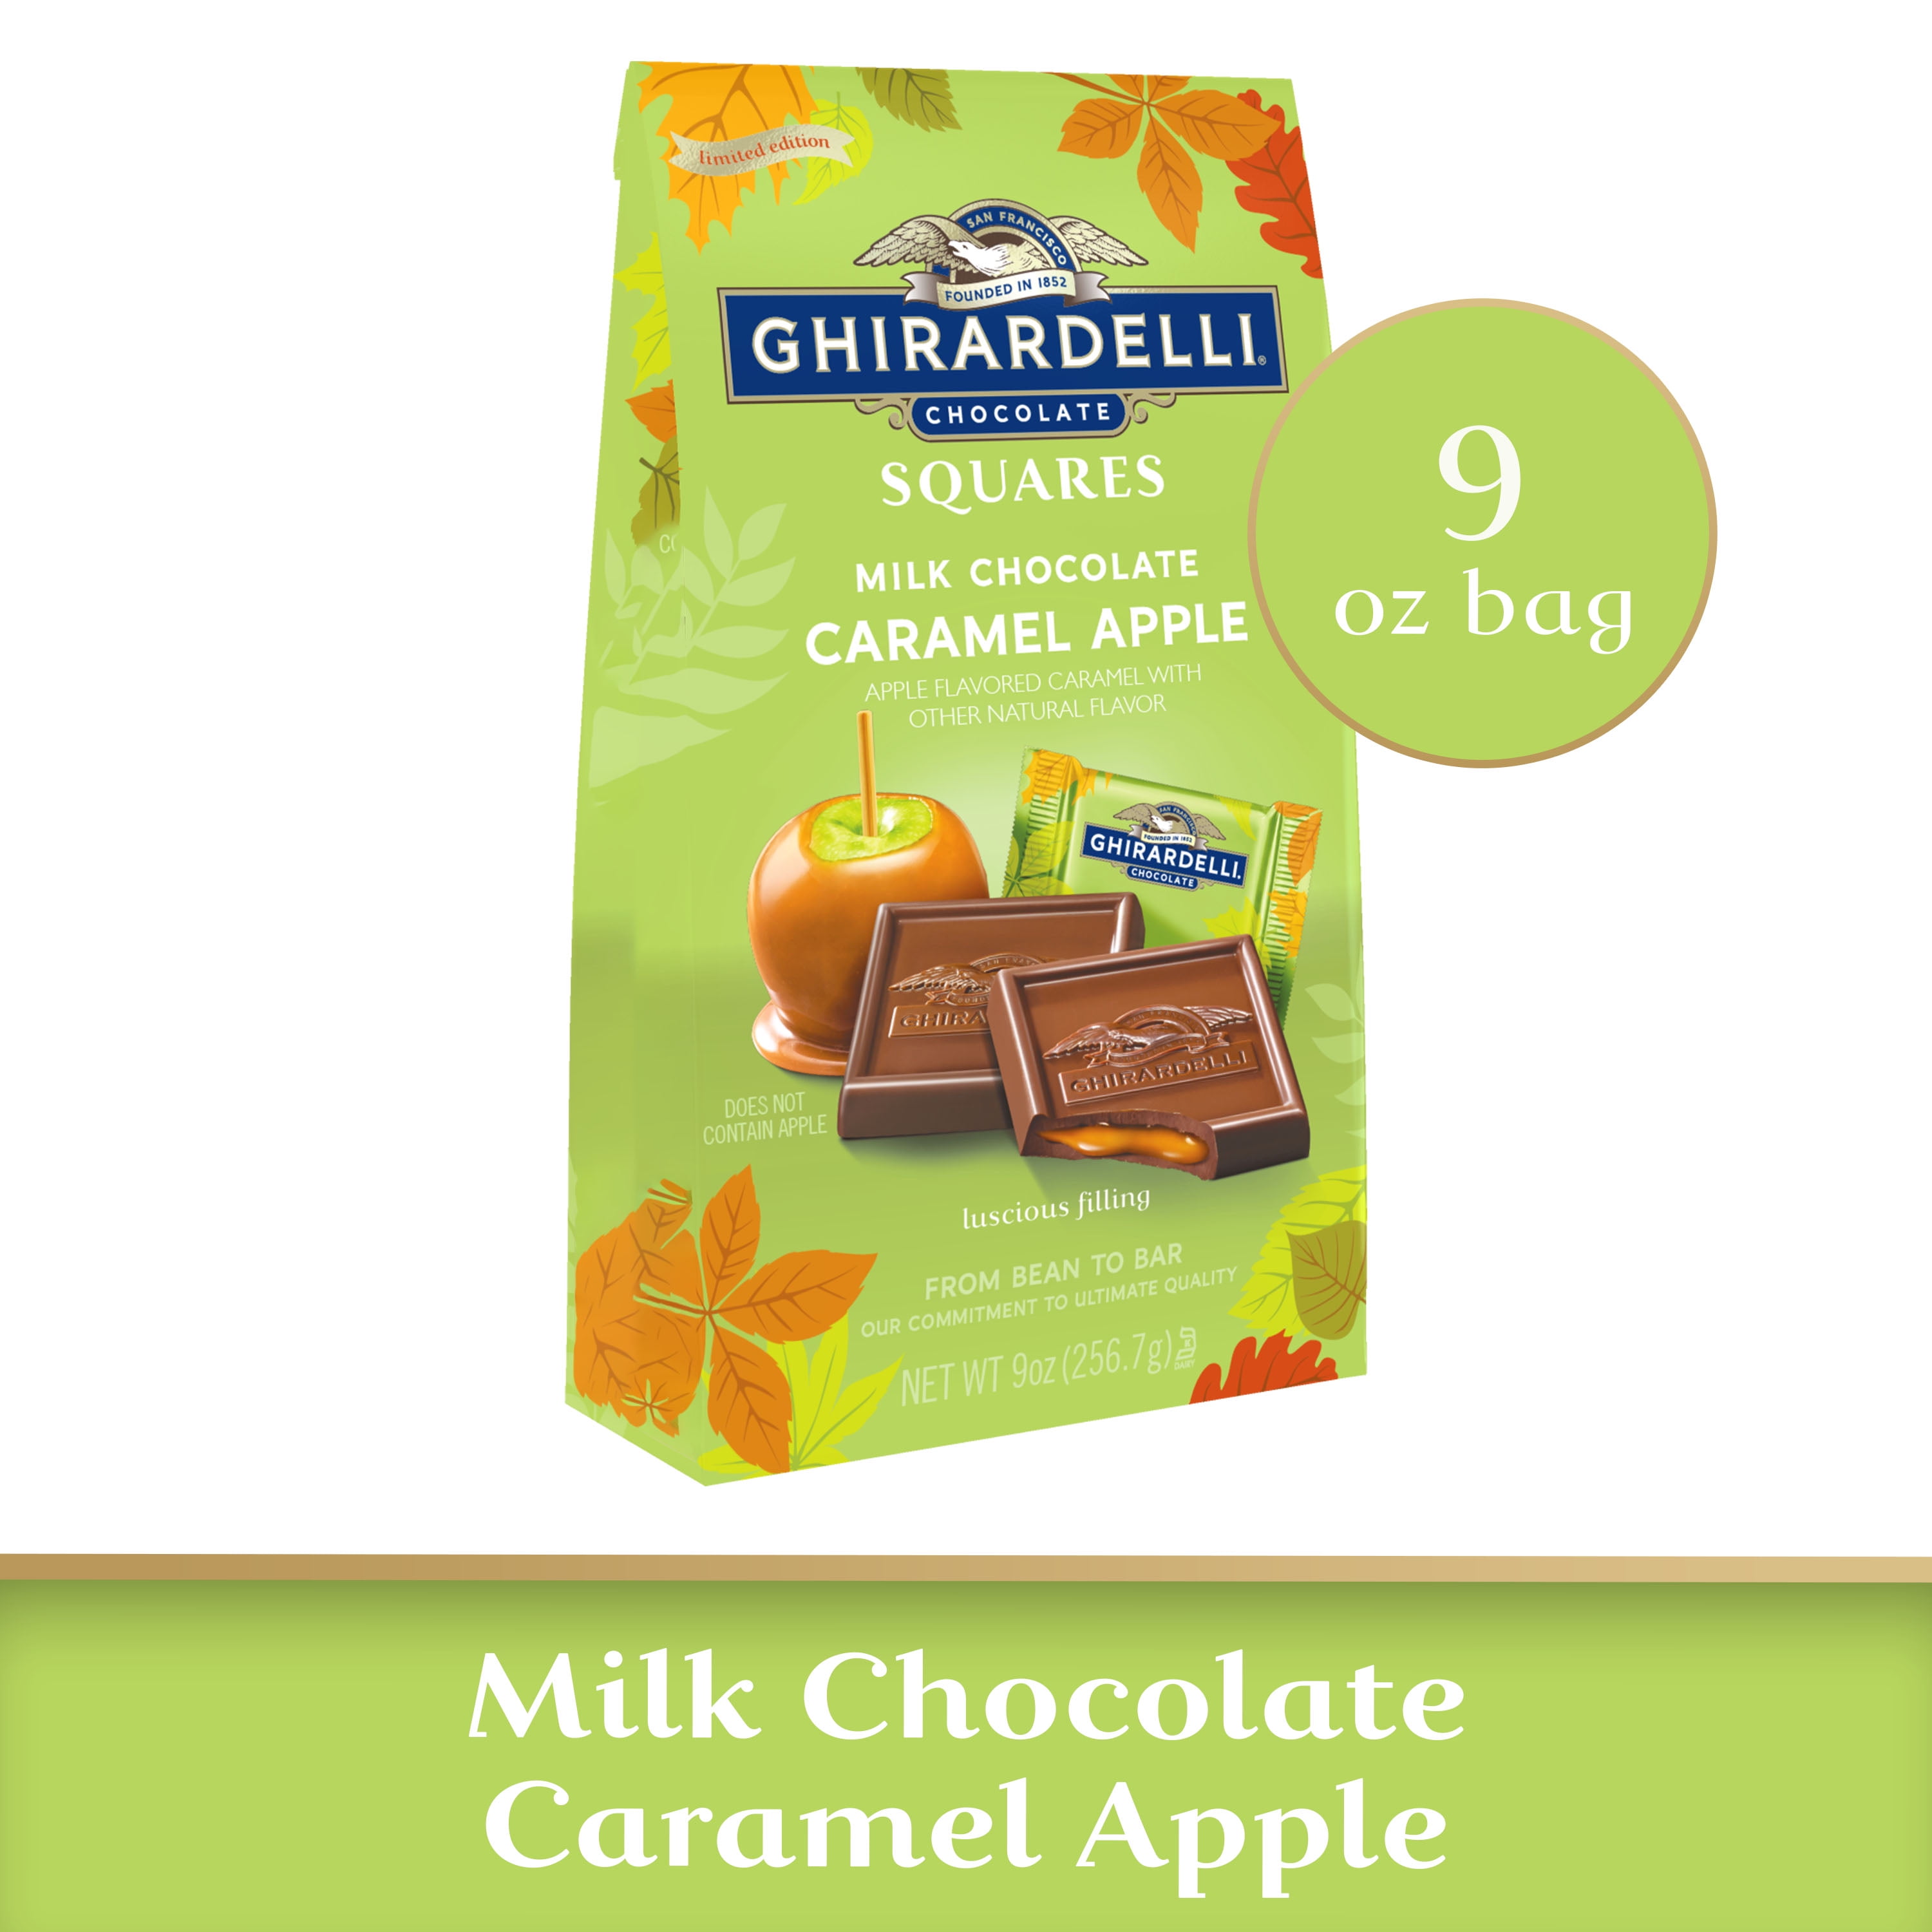 GHIRARDELLI Milk Chocolate Caramel Apple Squares, 9 Oz Bag